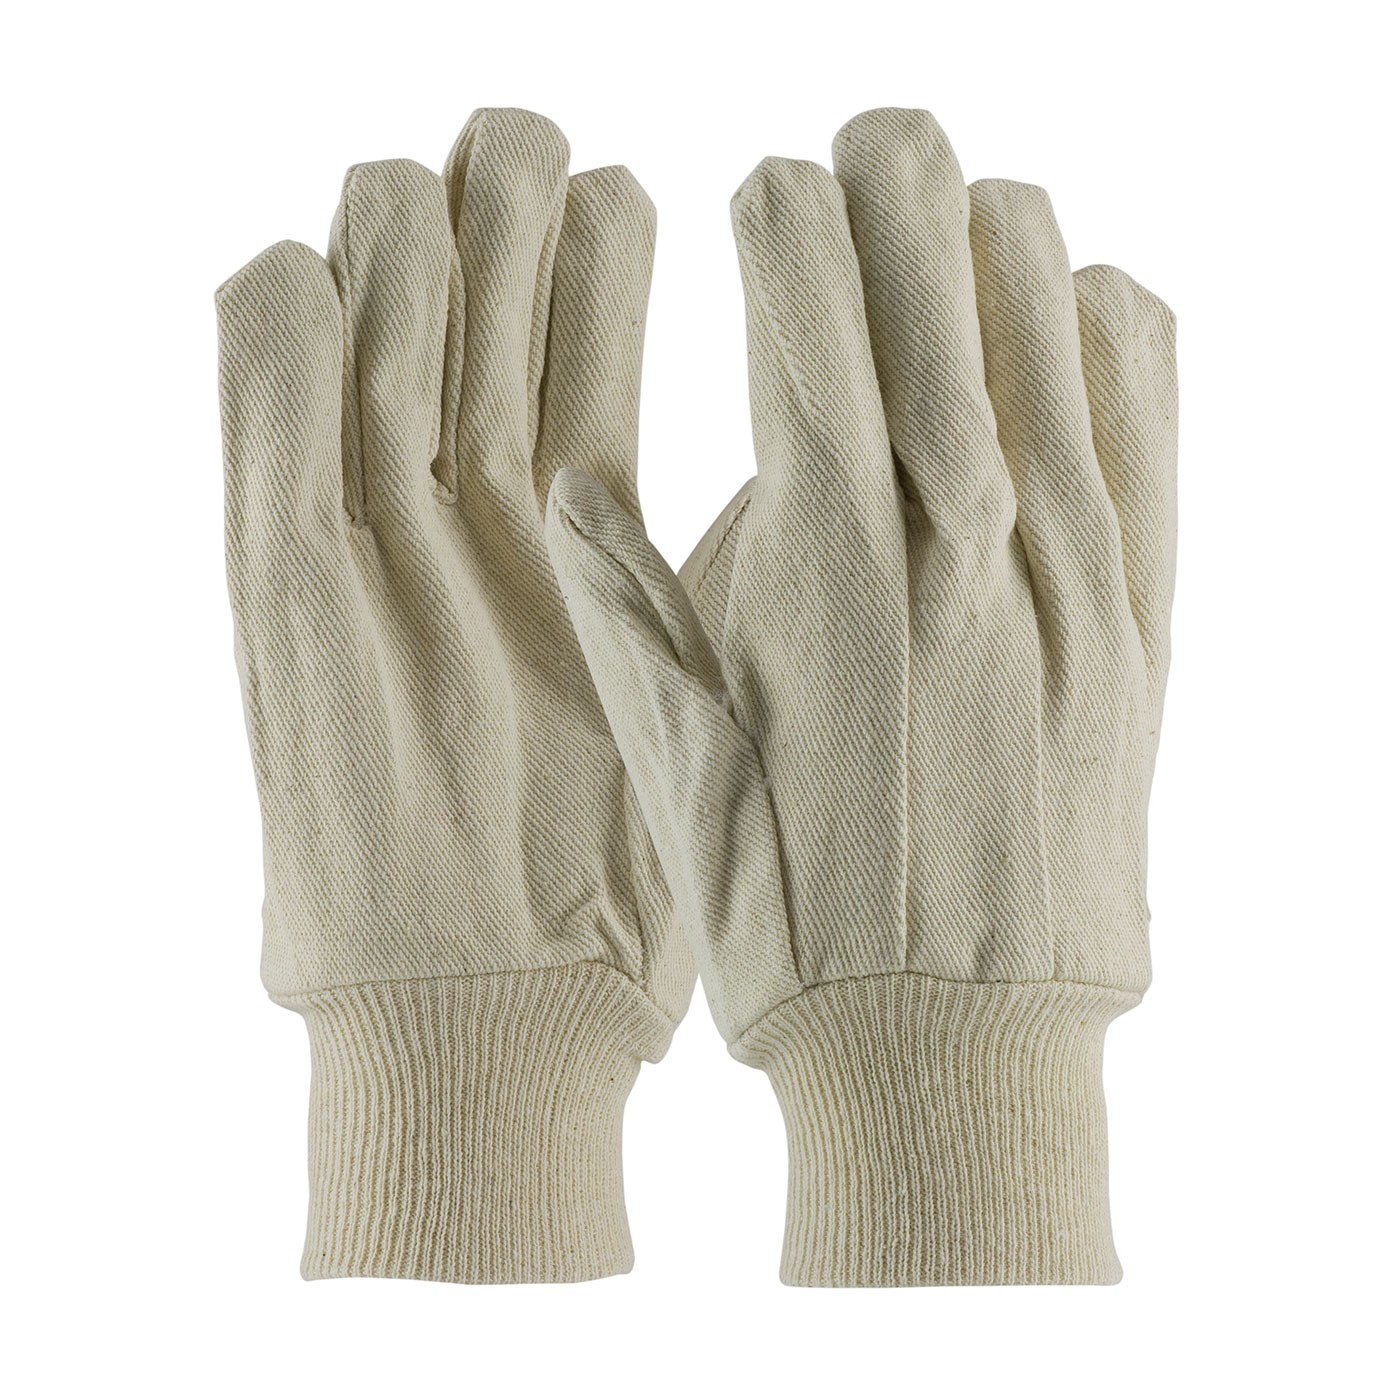 PIP® Economy Grade Cotton Canvas Single Palm Glove - Knitwrist  (#90-912I)